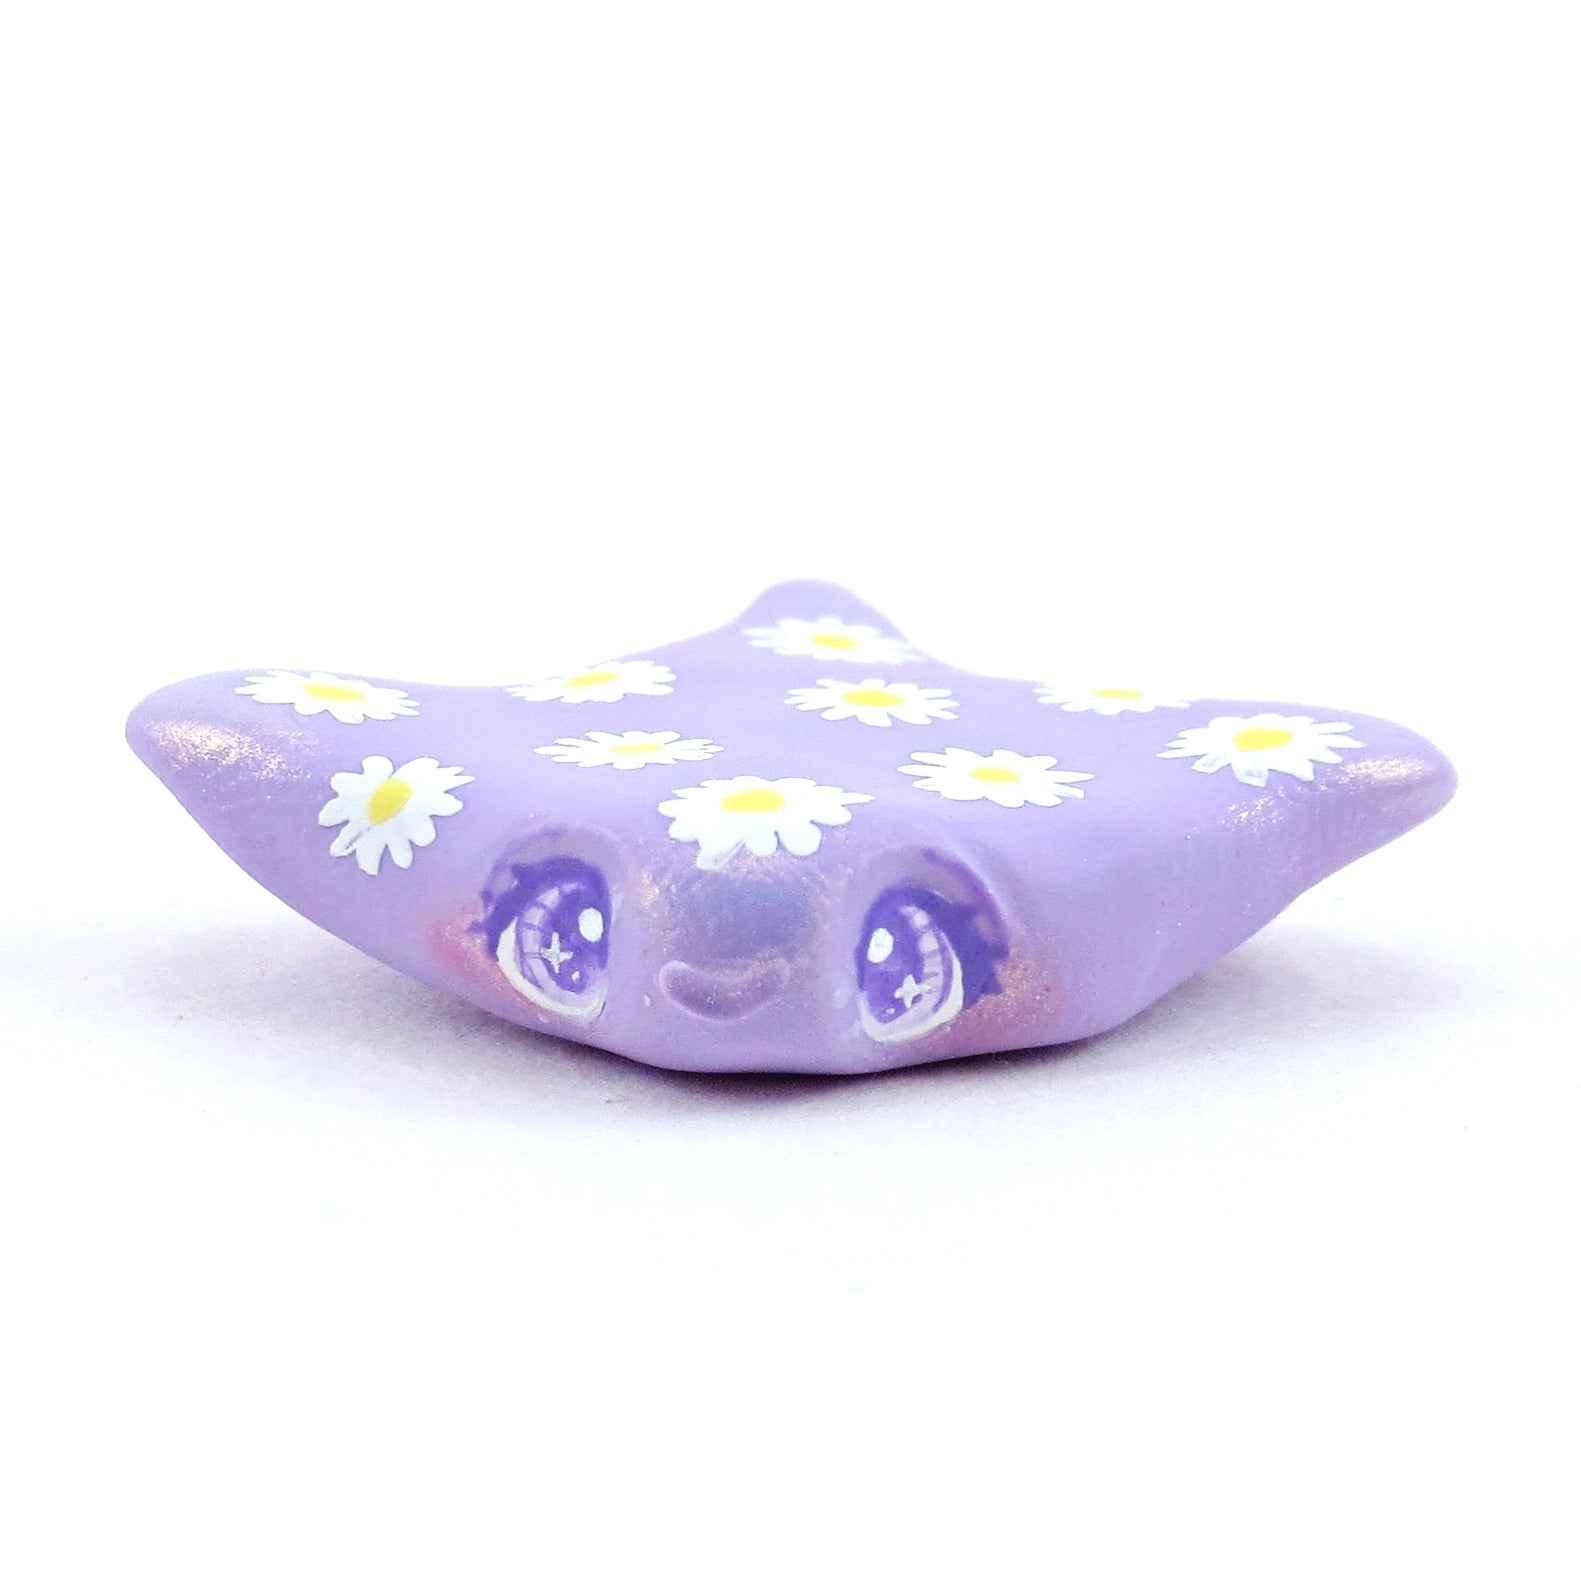 Daisy Purple Manta Ray Figurine - Polymer Clay Doodle Ocean Collection